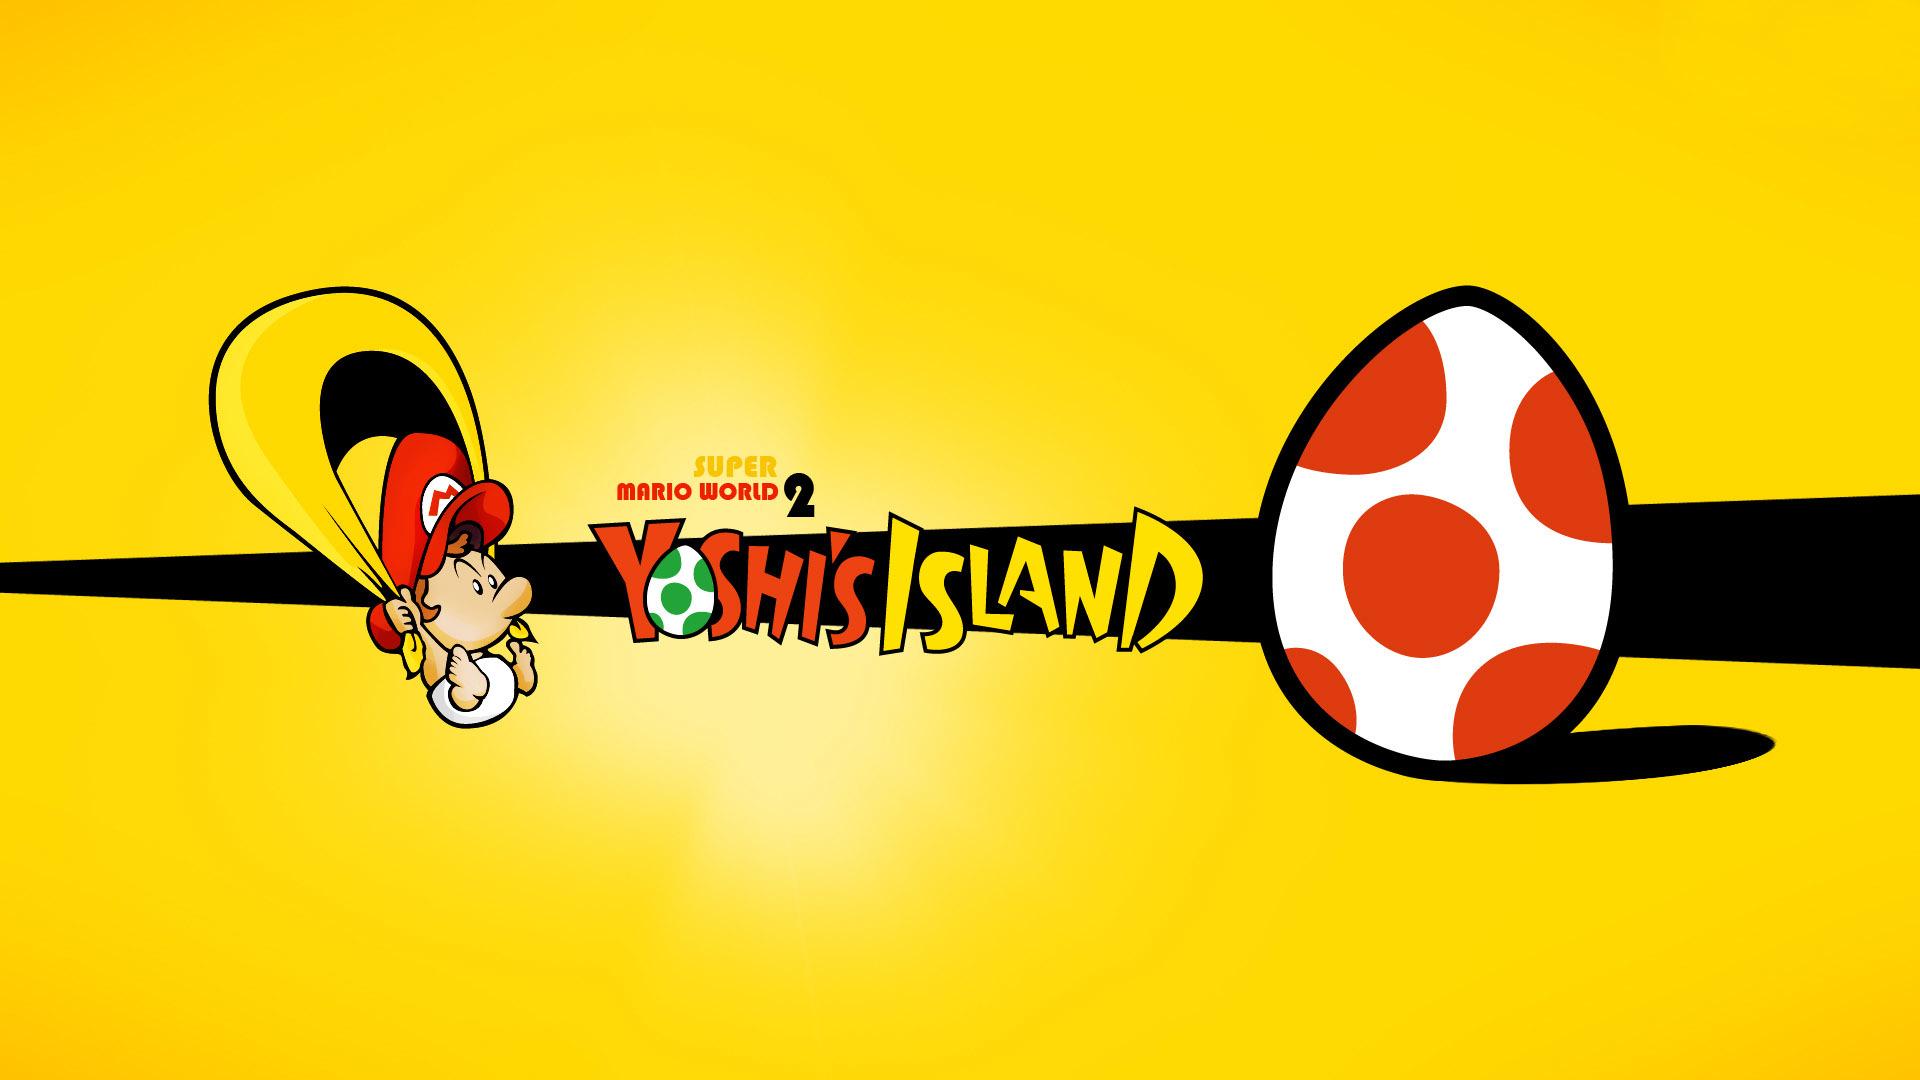 Super Mario World Yoshi’s Island Wallpapers